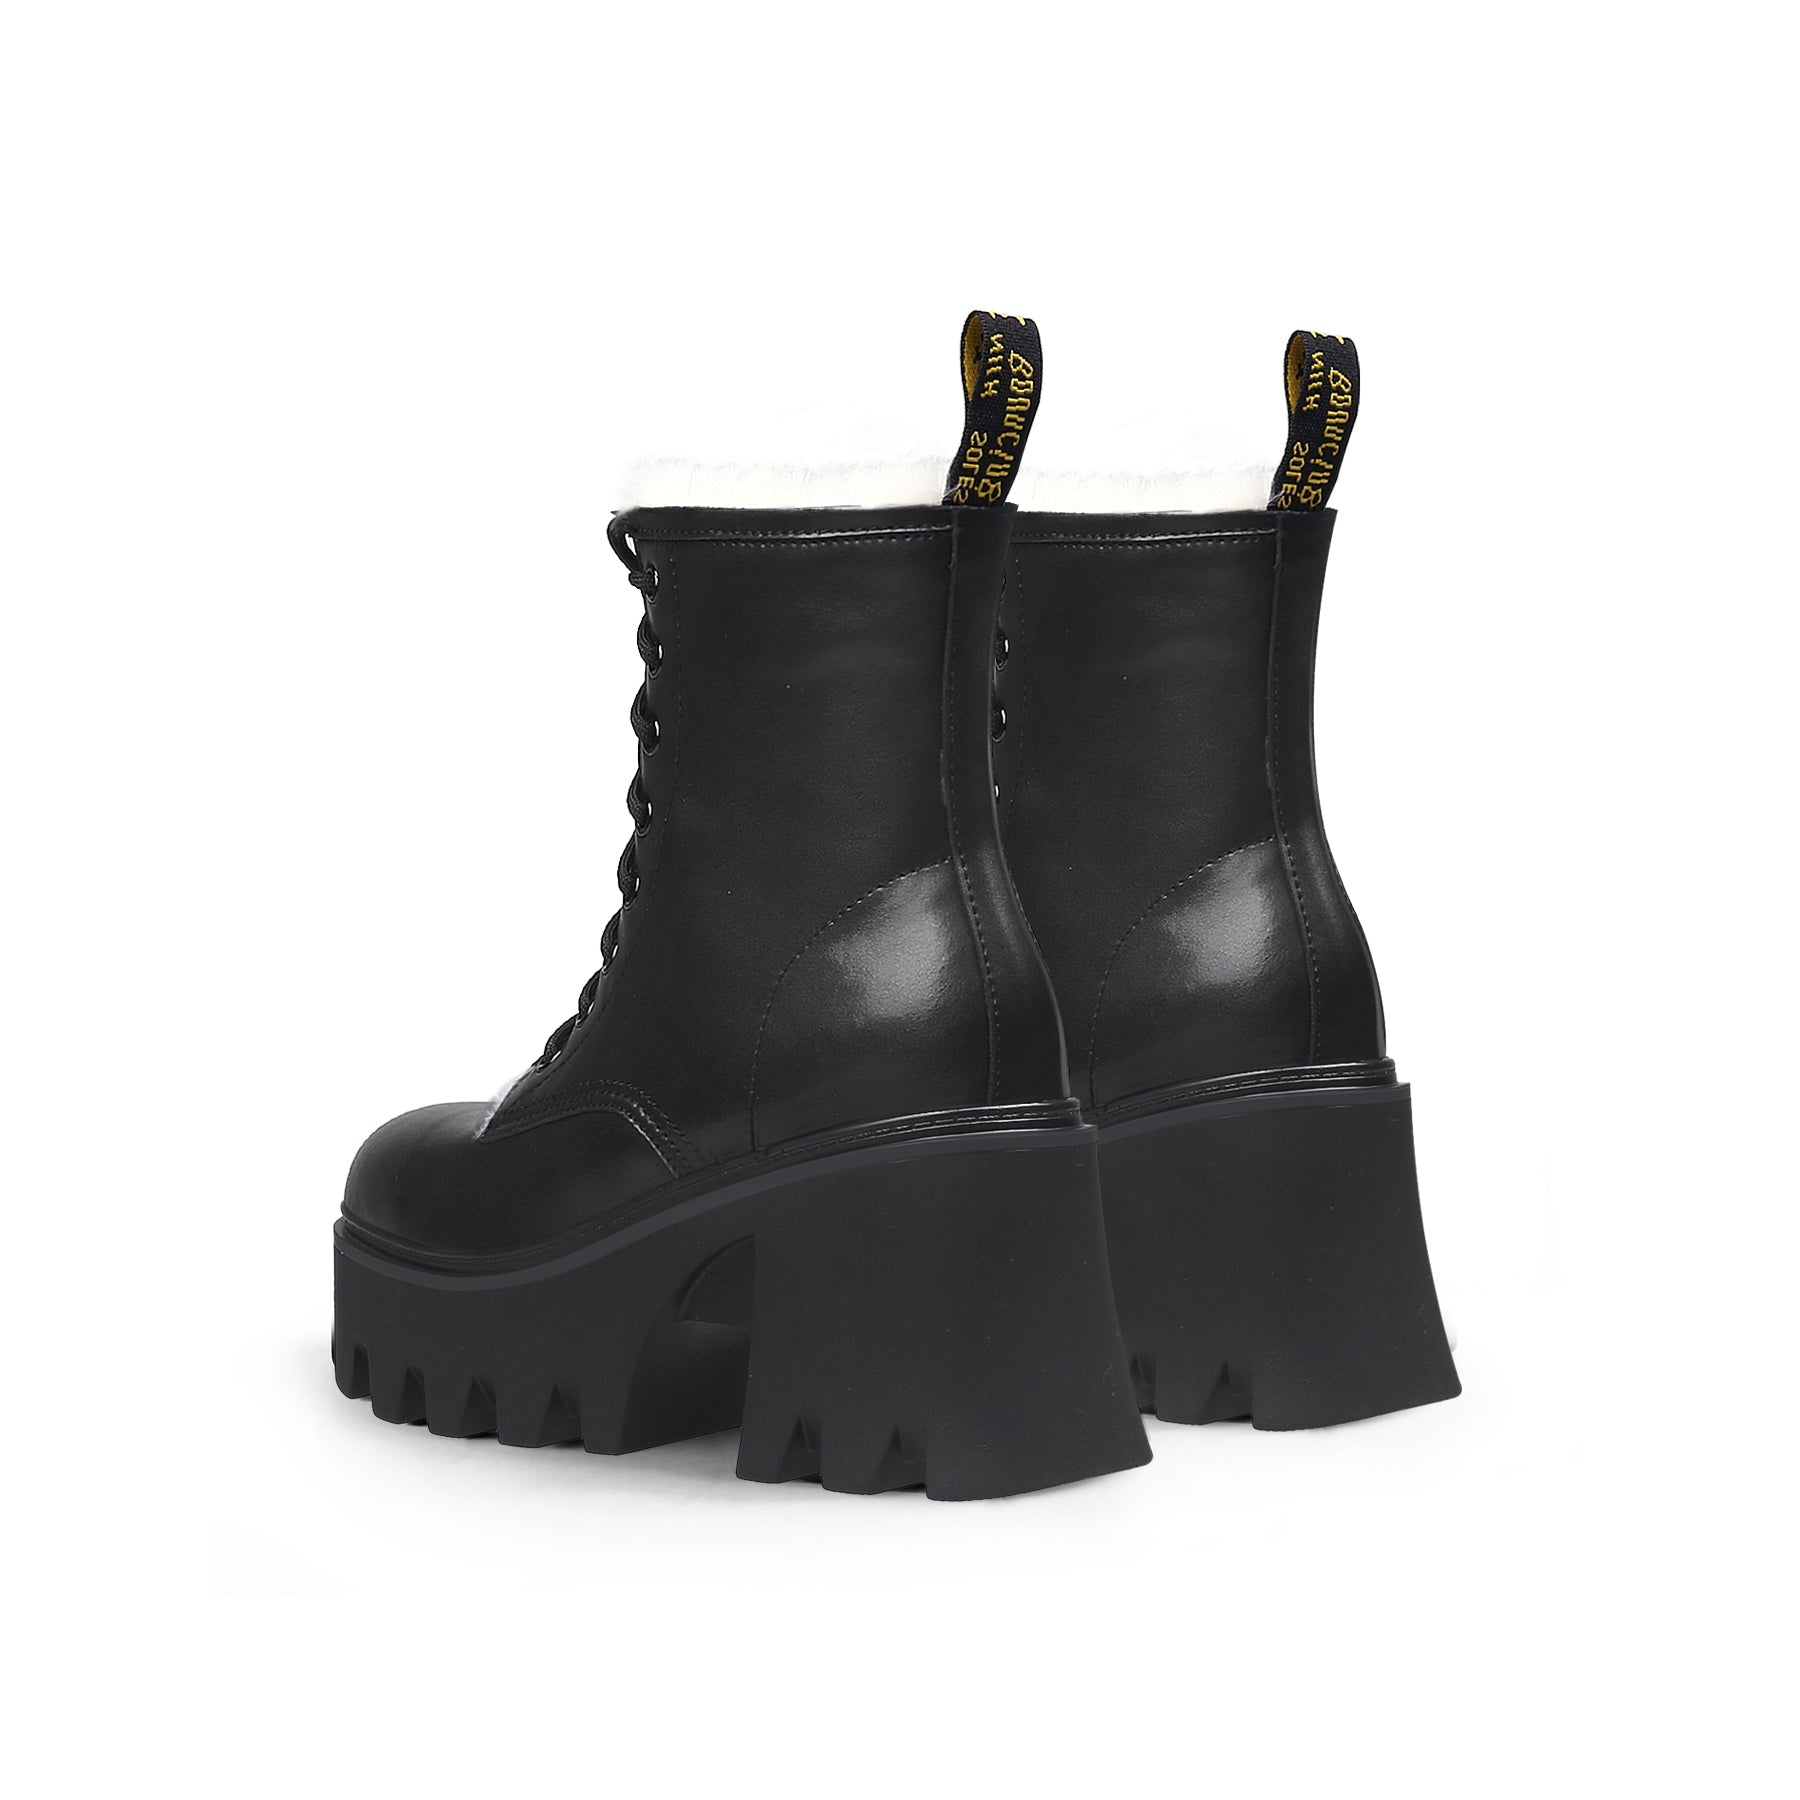 Warm Fluffy Black High Platform Boots - 0cm